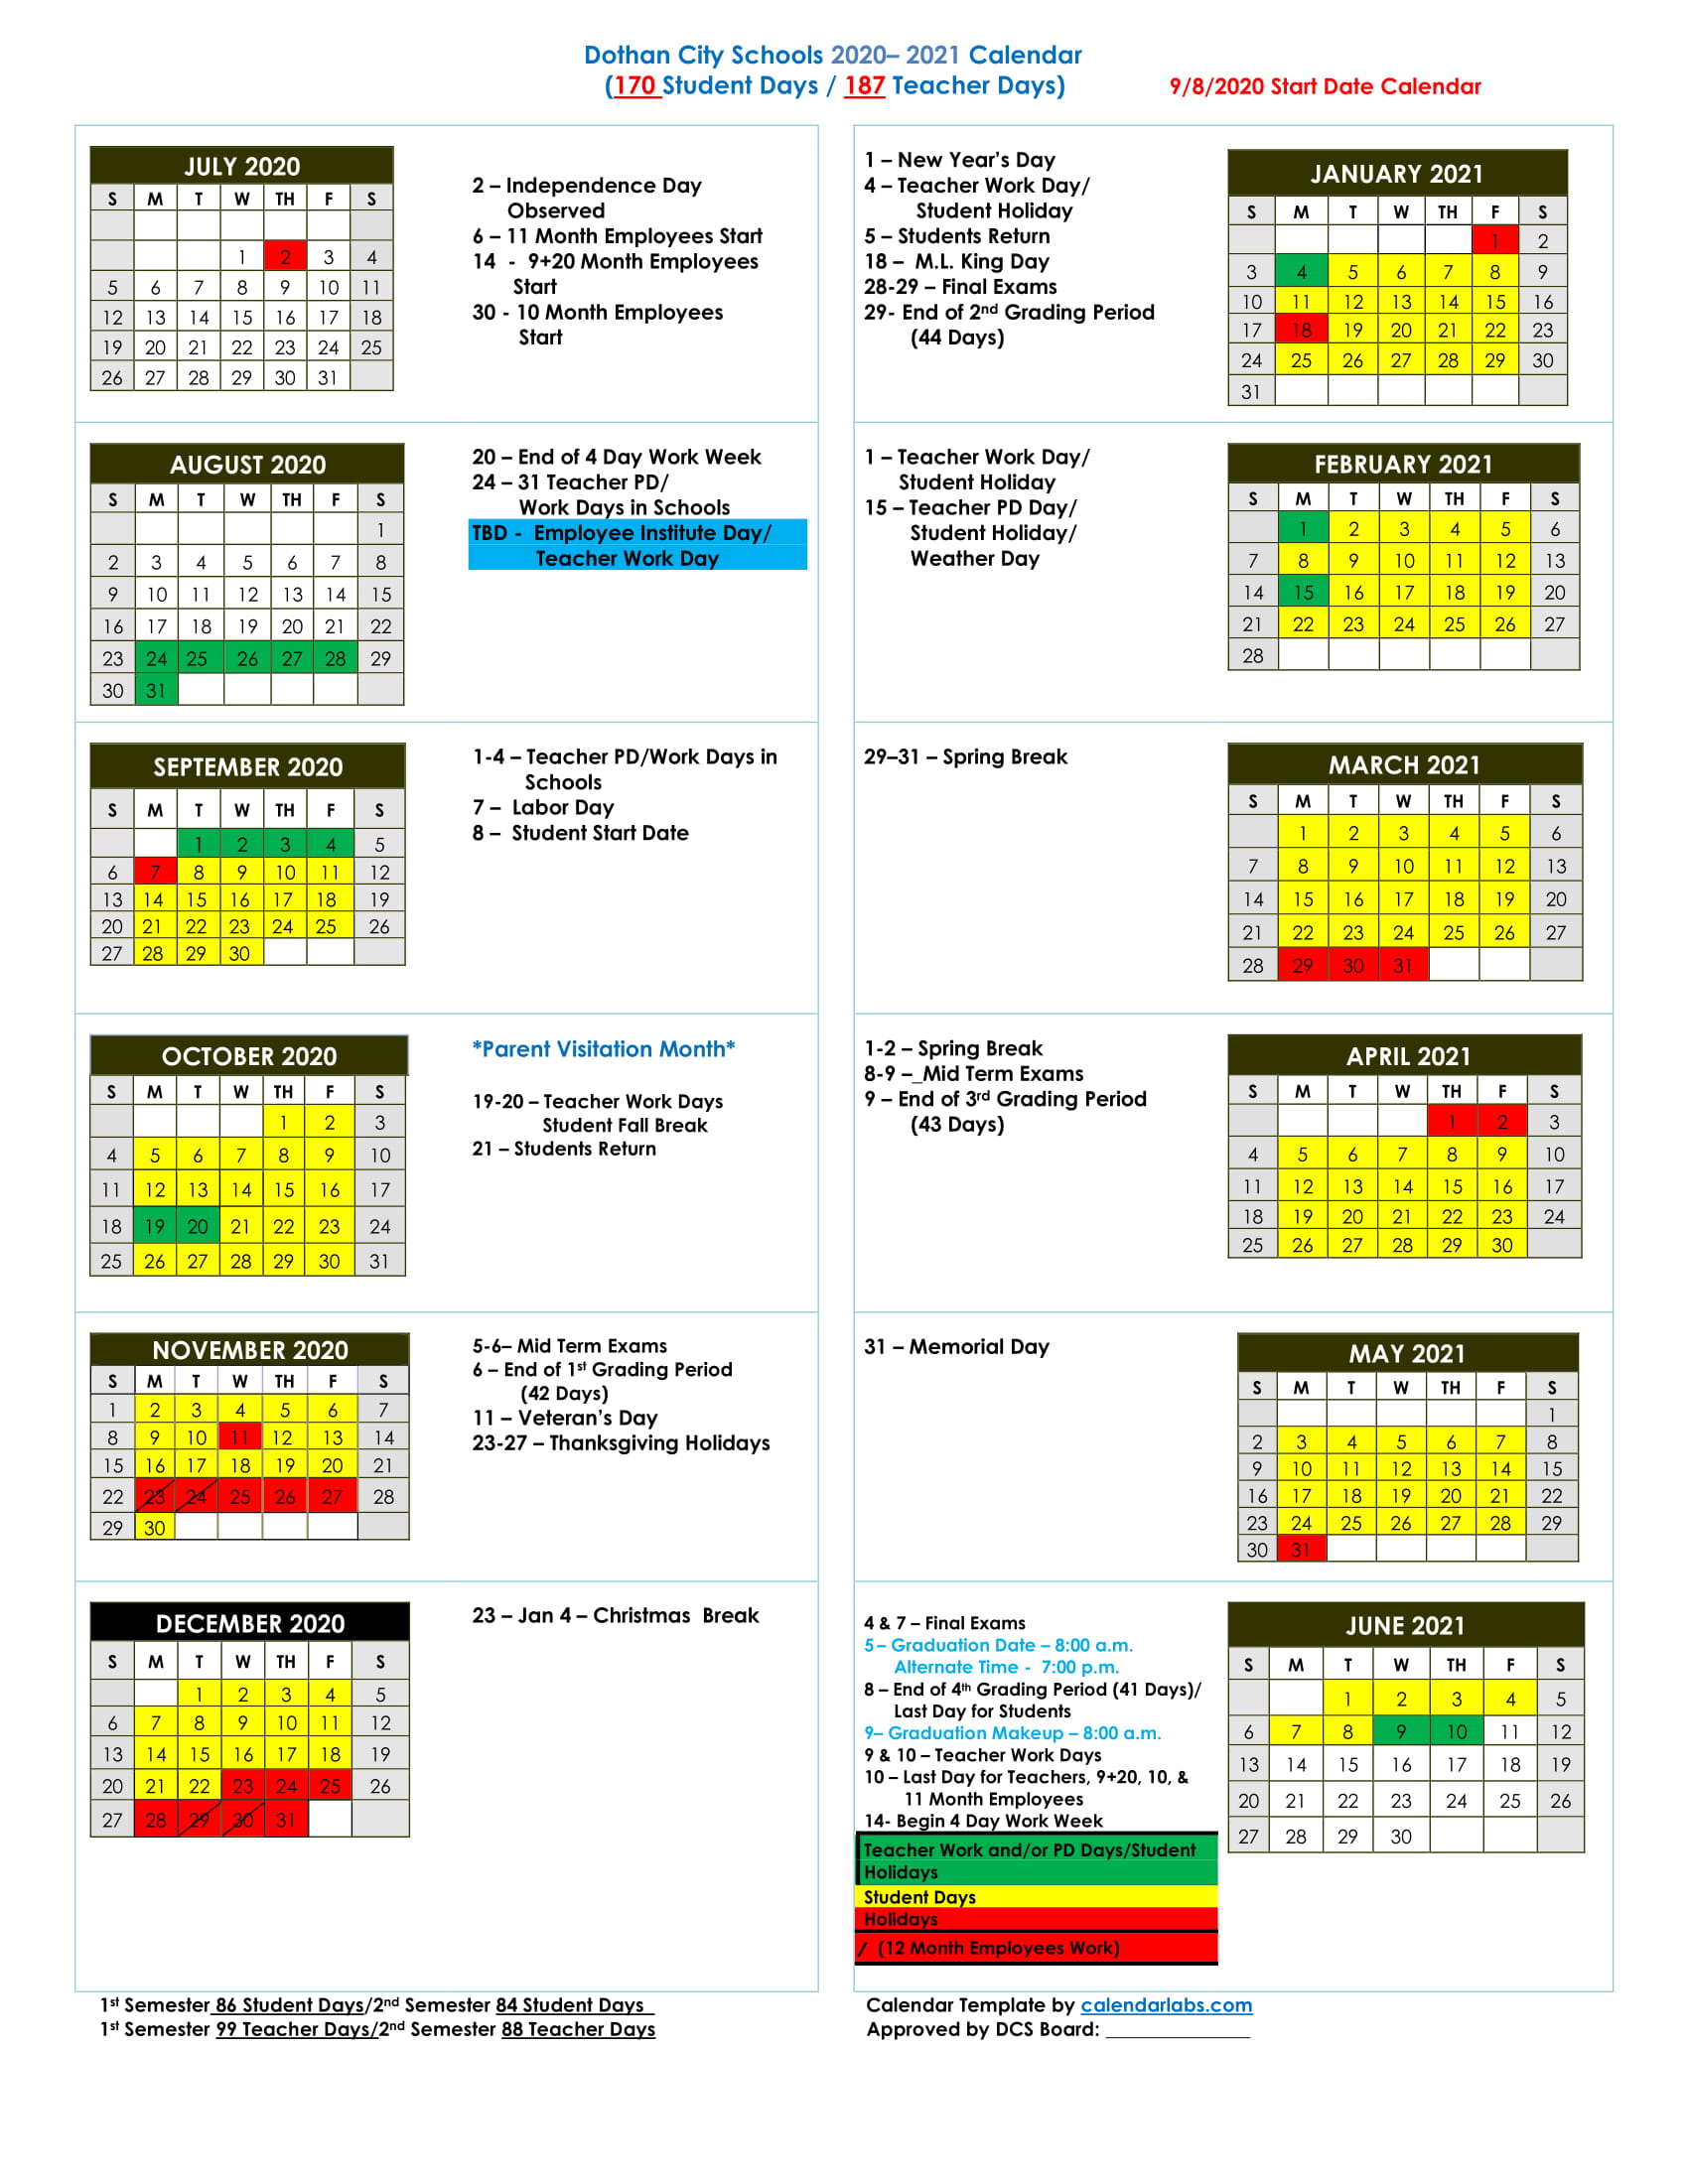 Pepperdine Academic Calendar 2022 Dothan City Schools Calendar 2021 And 2022